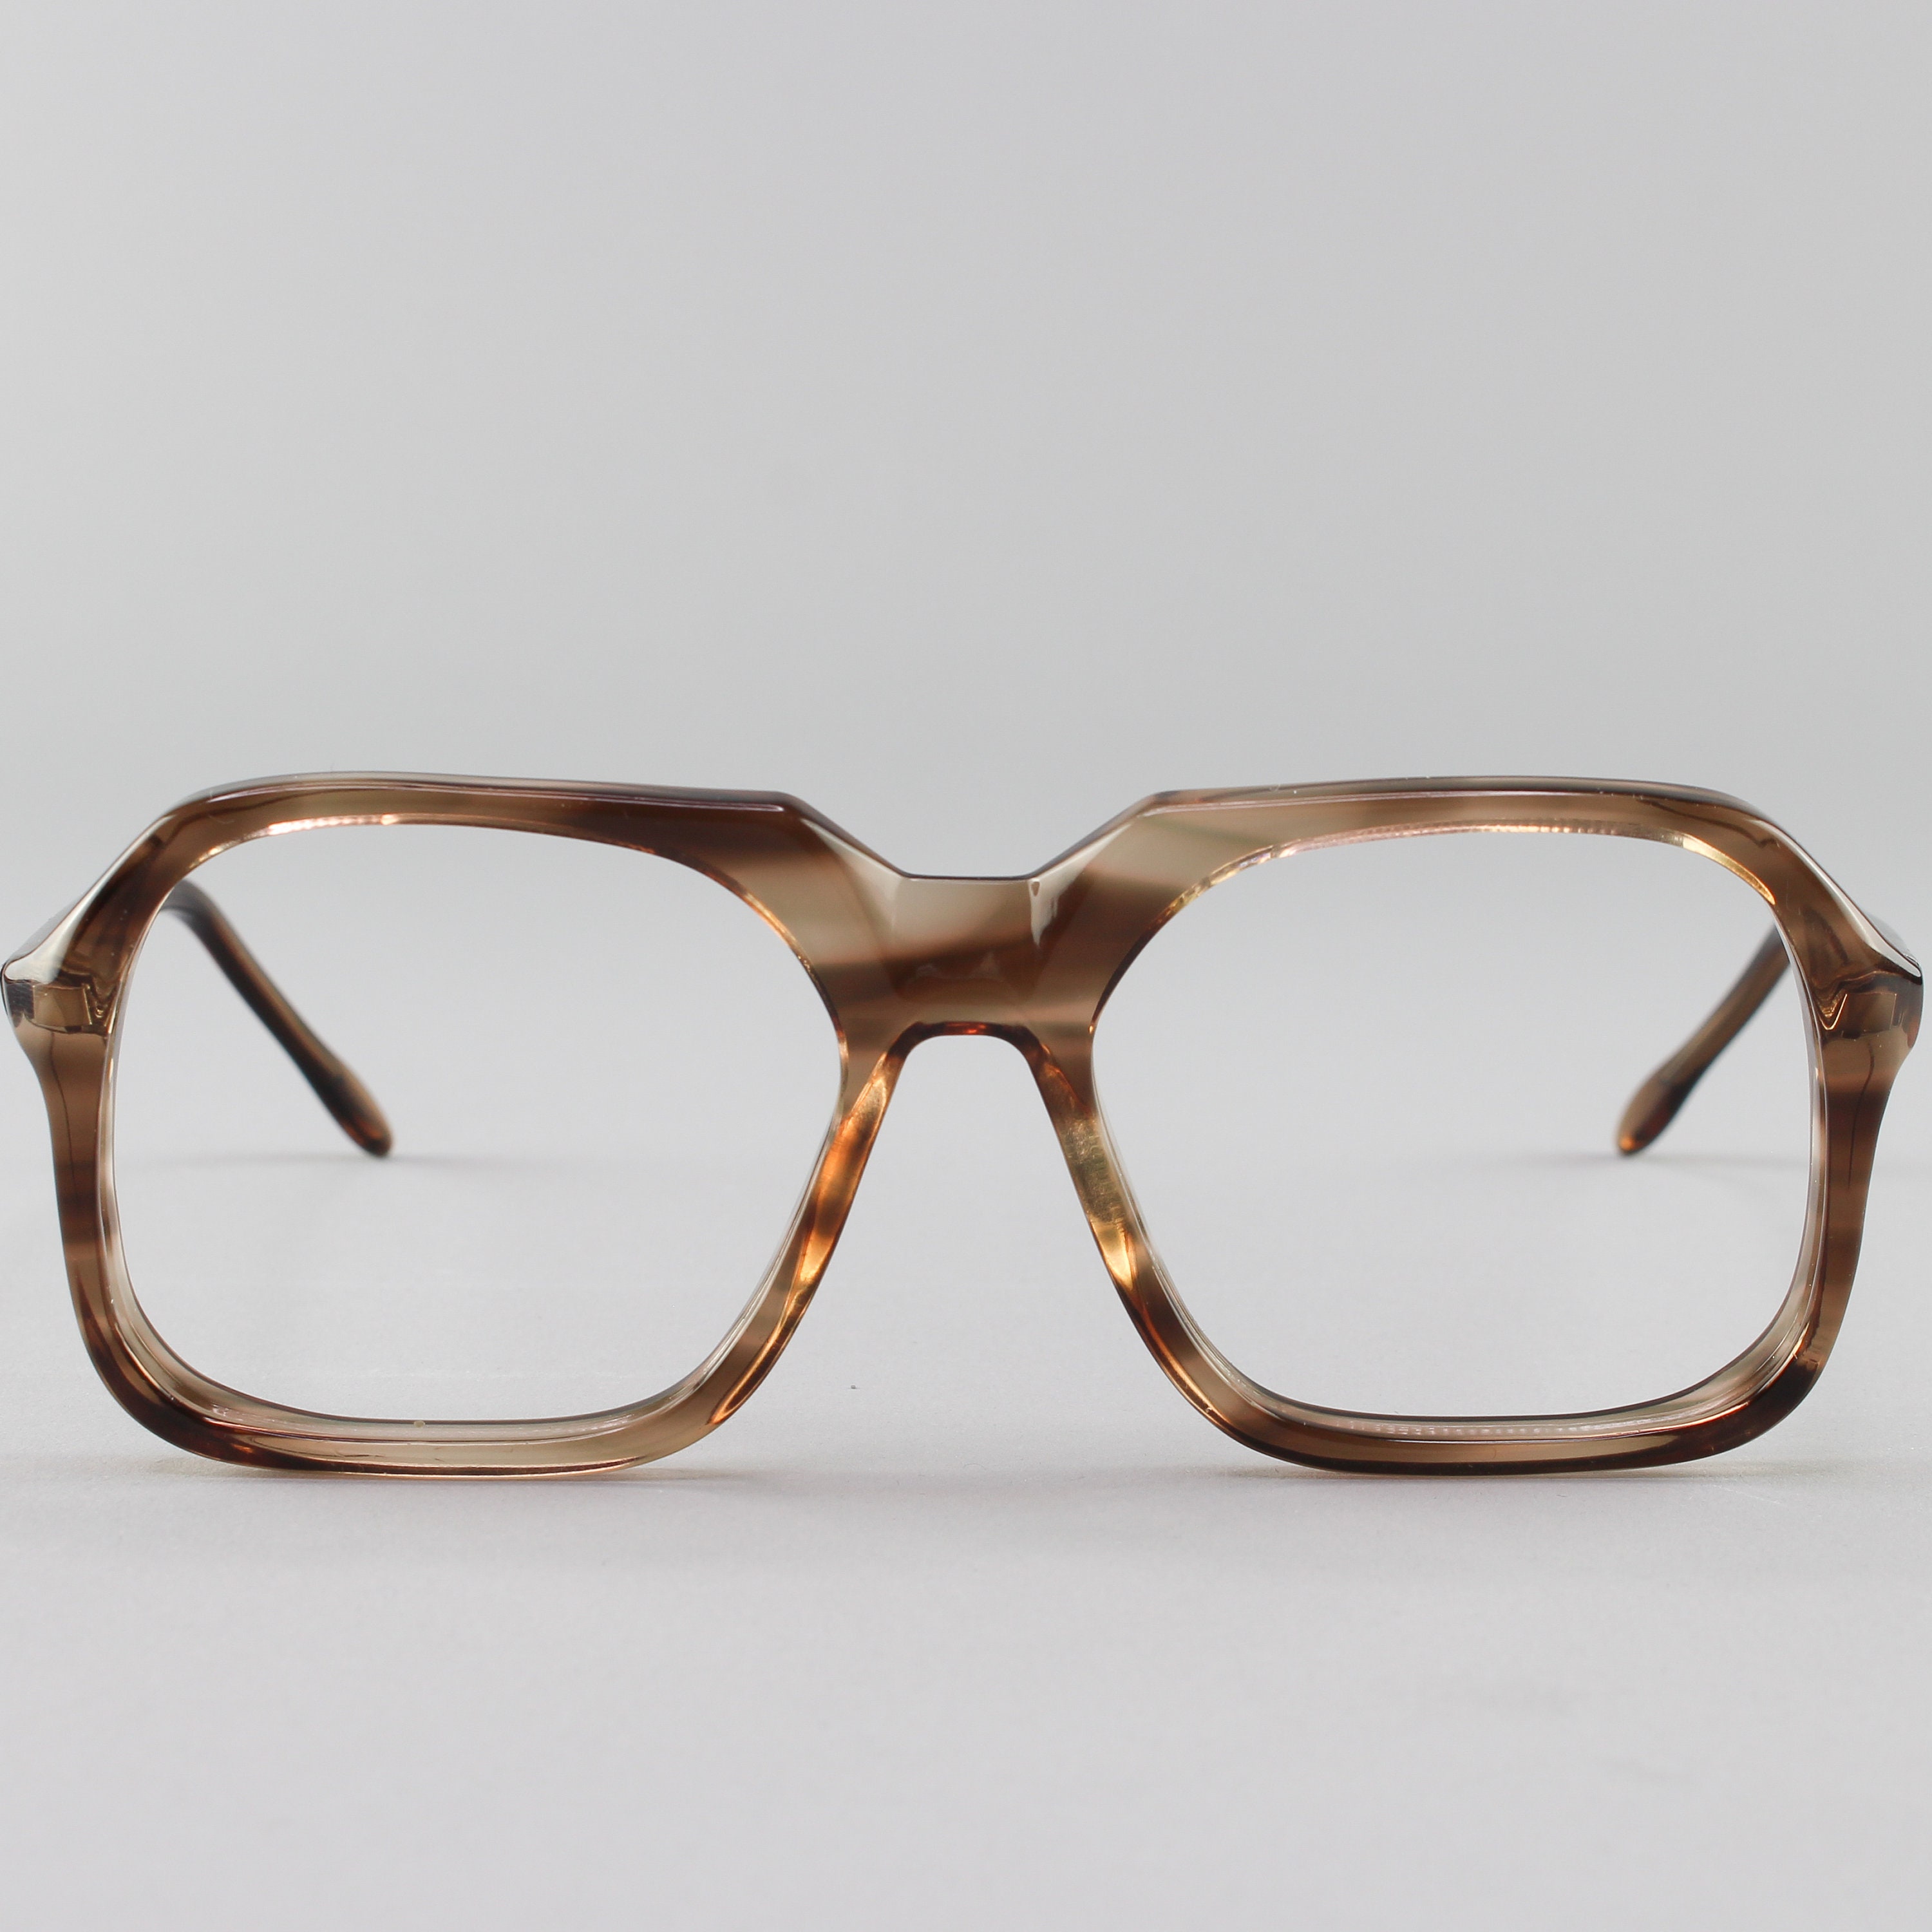 Vintage Eyeglasses 70s Glasses 1970s Clear Brown Square Eyeglass